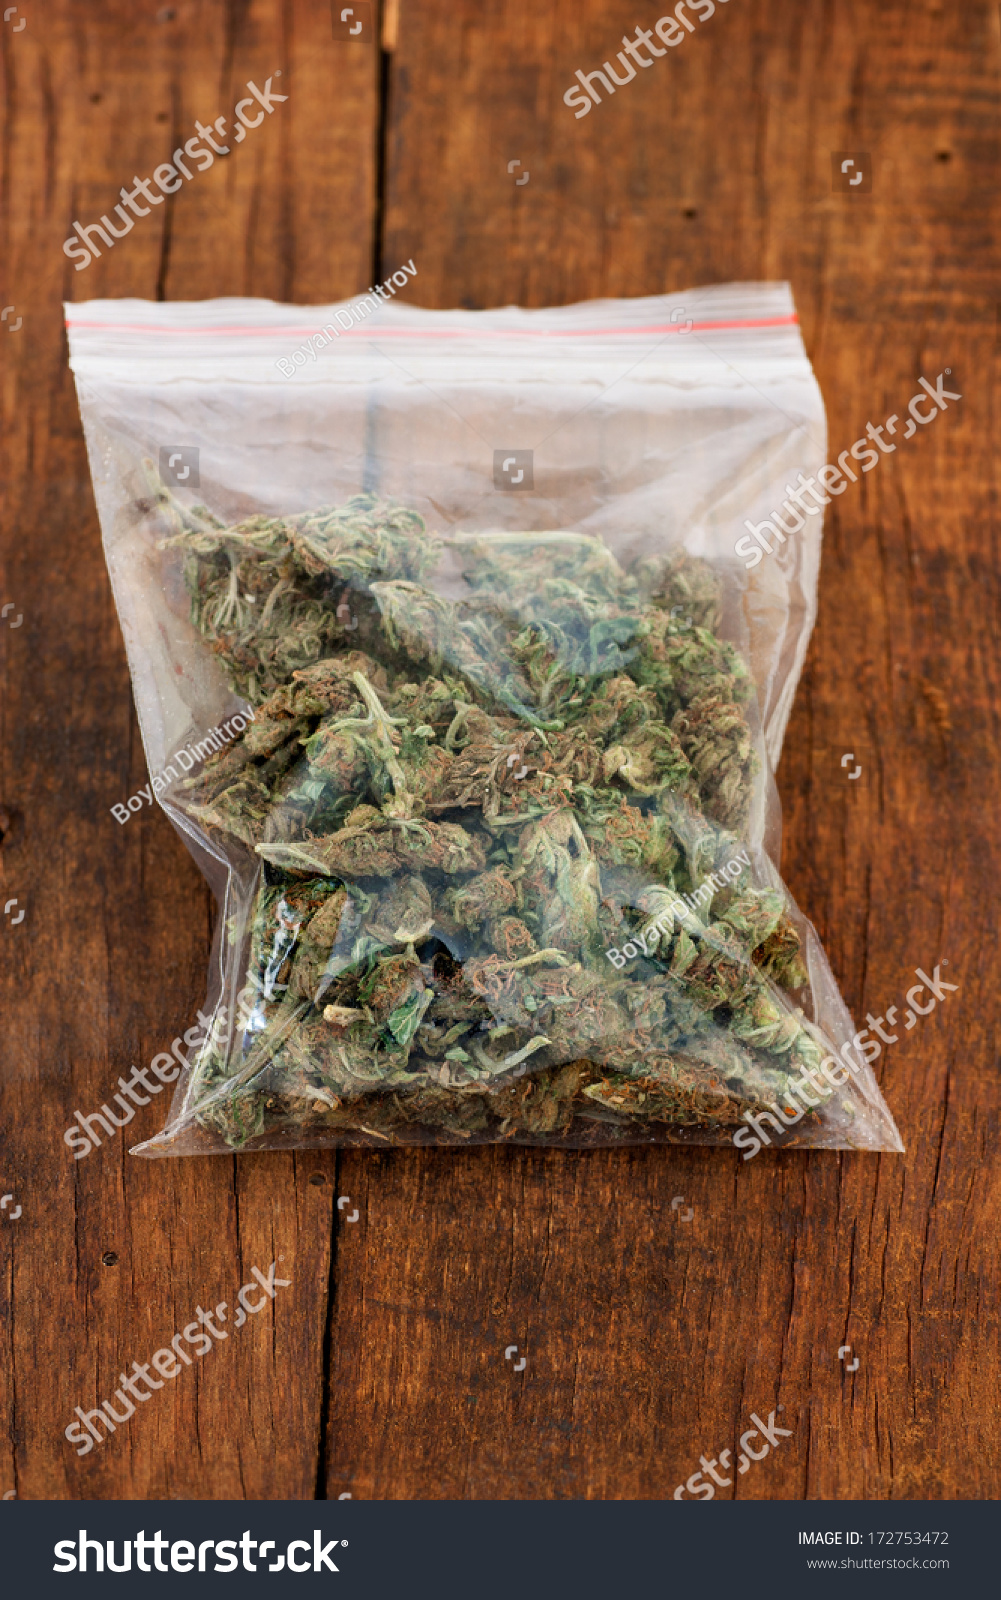 Big Plastic Bag Of Weed Or Marijuana On Wooden Background Stock Photo ...